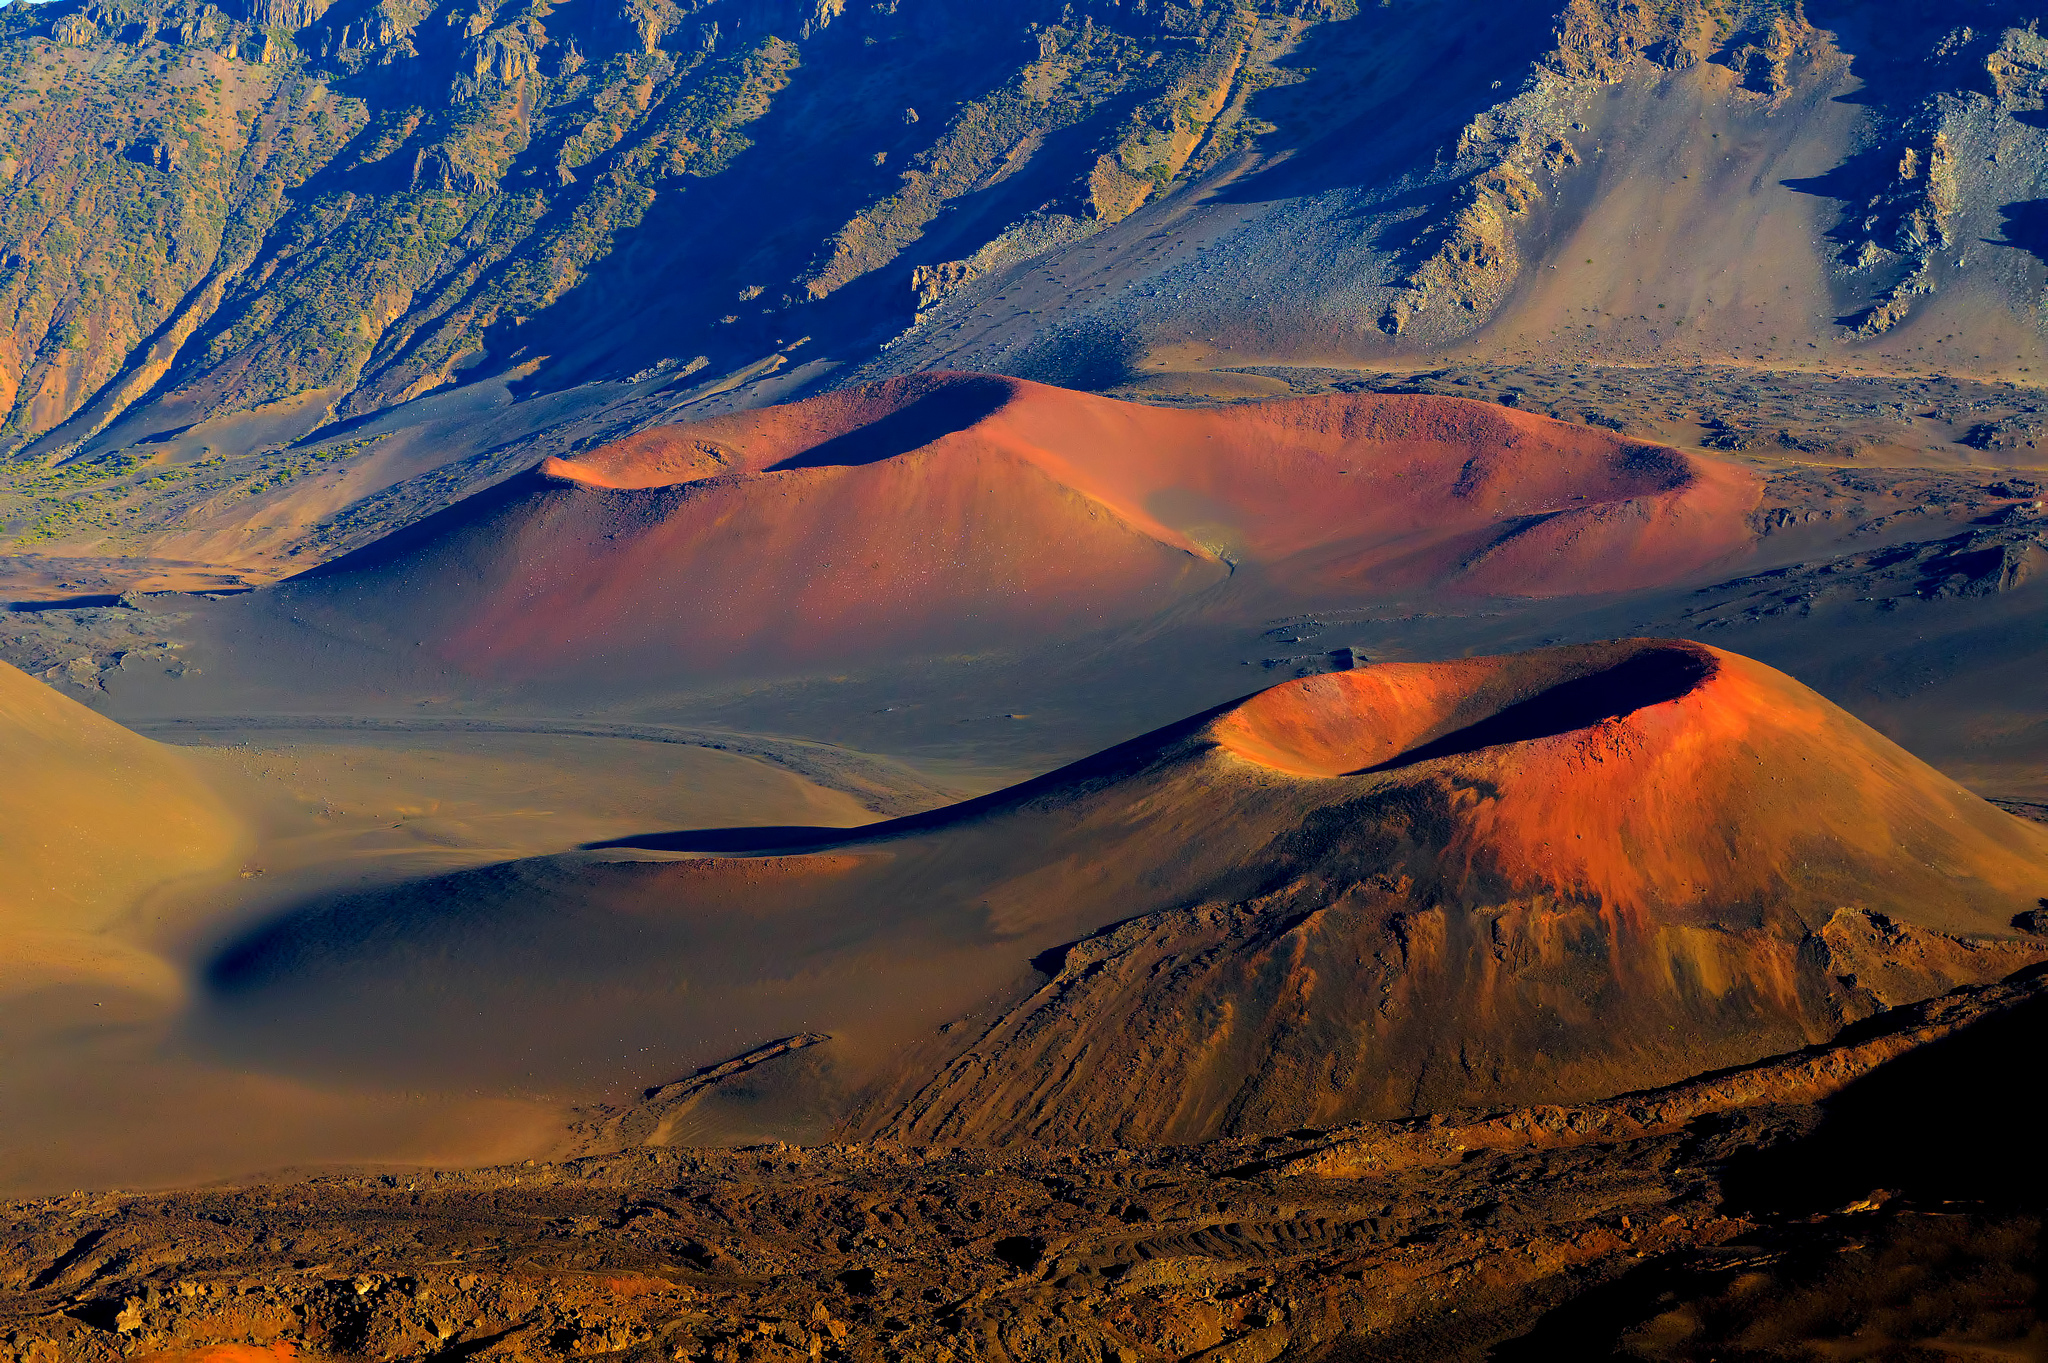 271803 Bild herunterladen erde/natur, vulkan, hawaii, landschaft, gebirge, szene, vulkane - Hintergrundbilder und Bildschirmschoner kostenlos